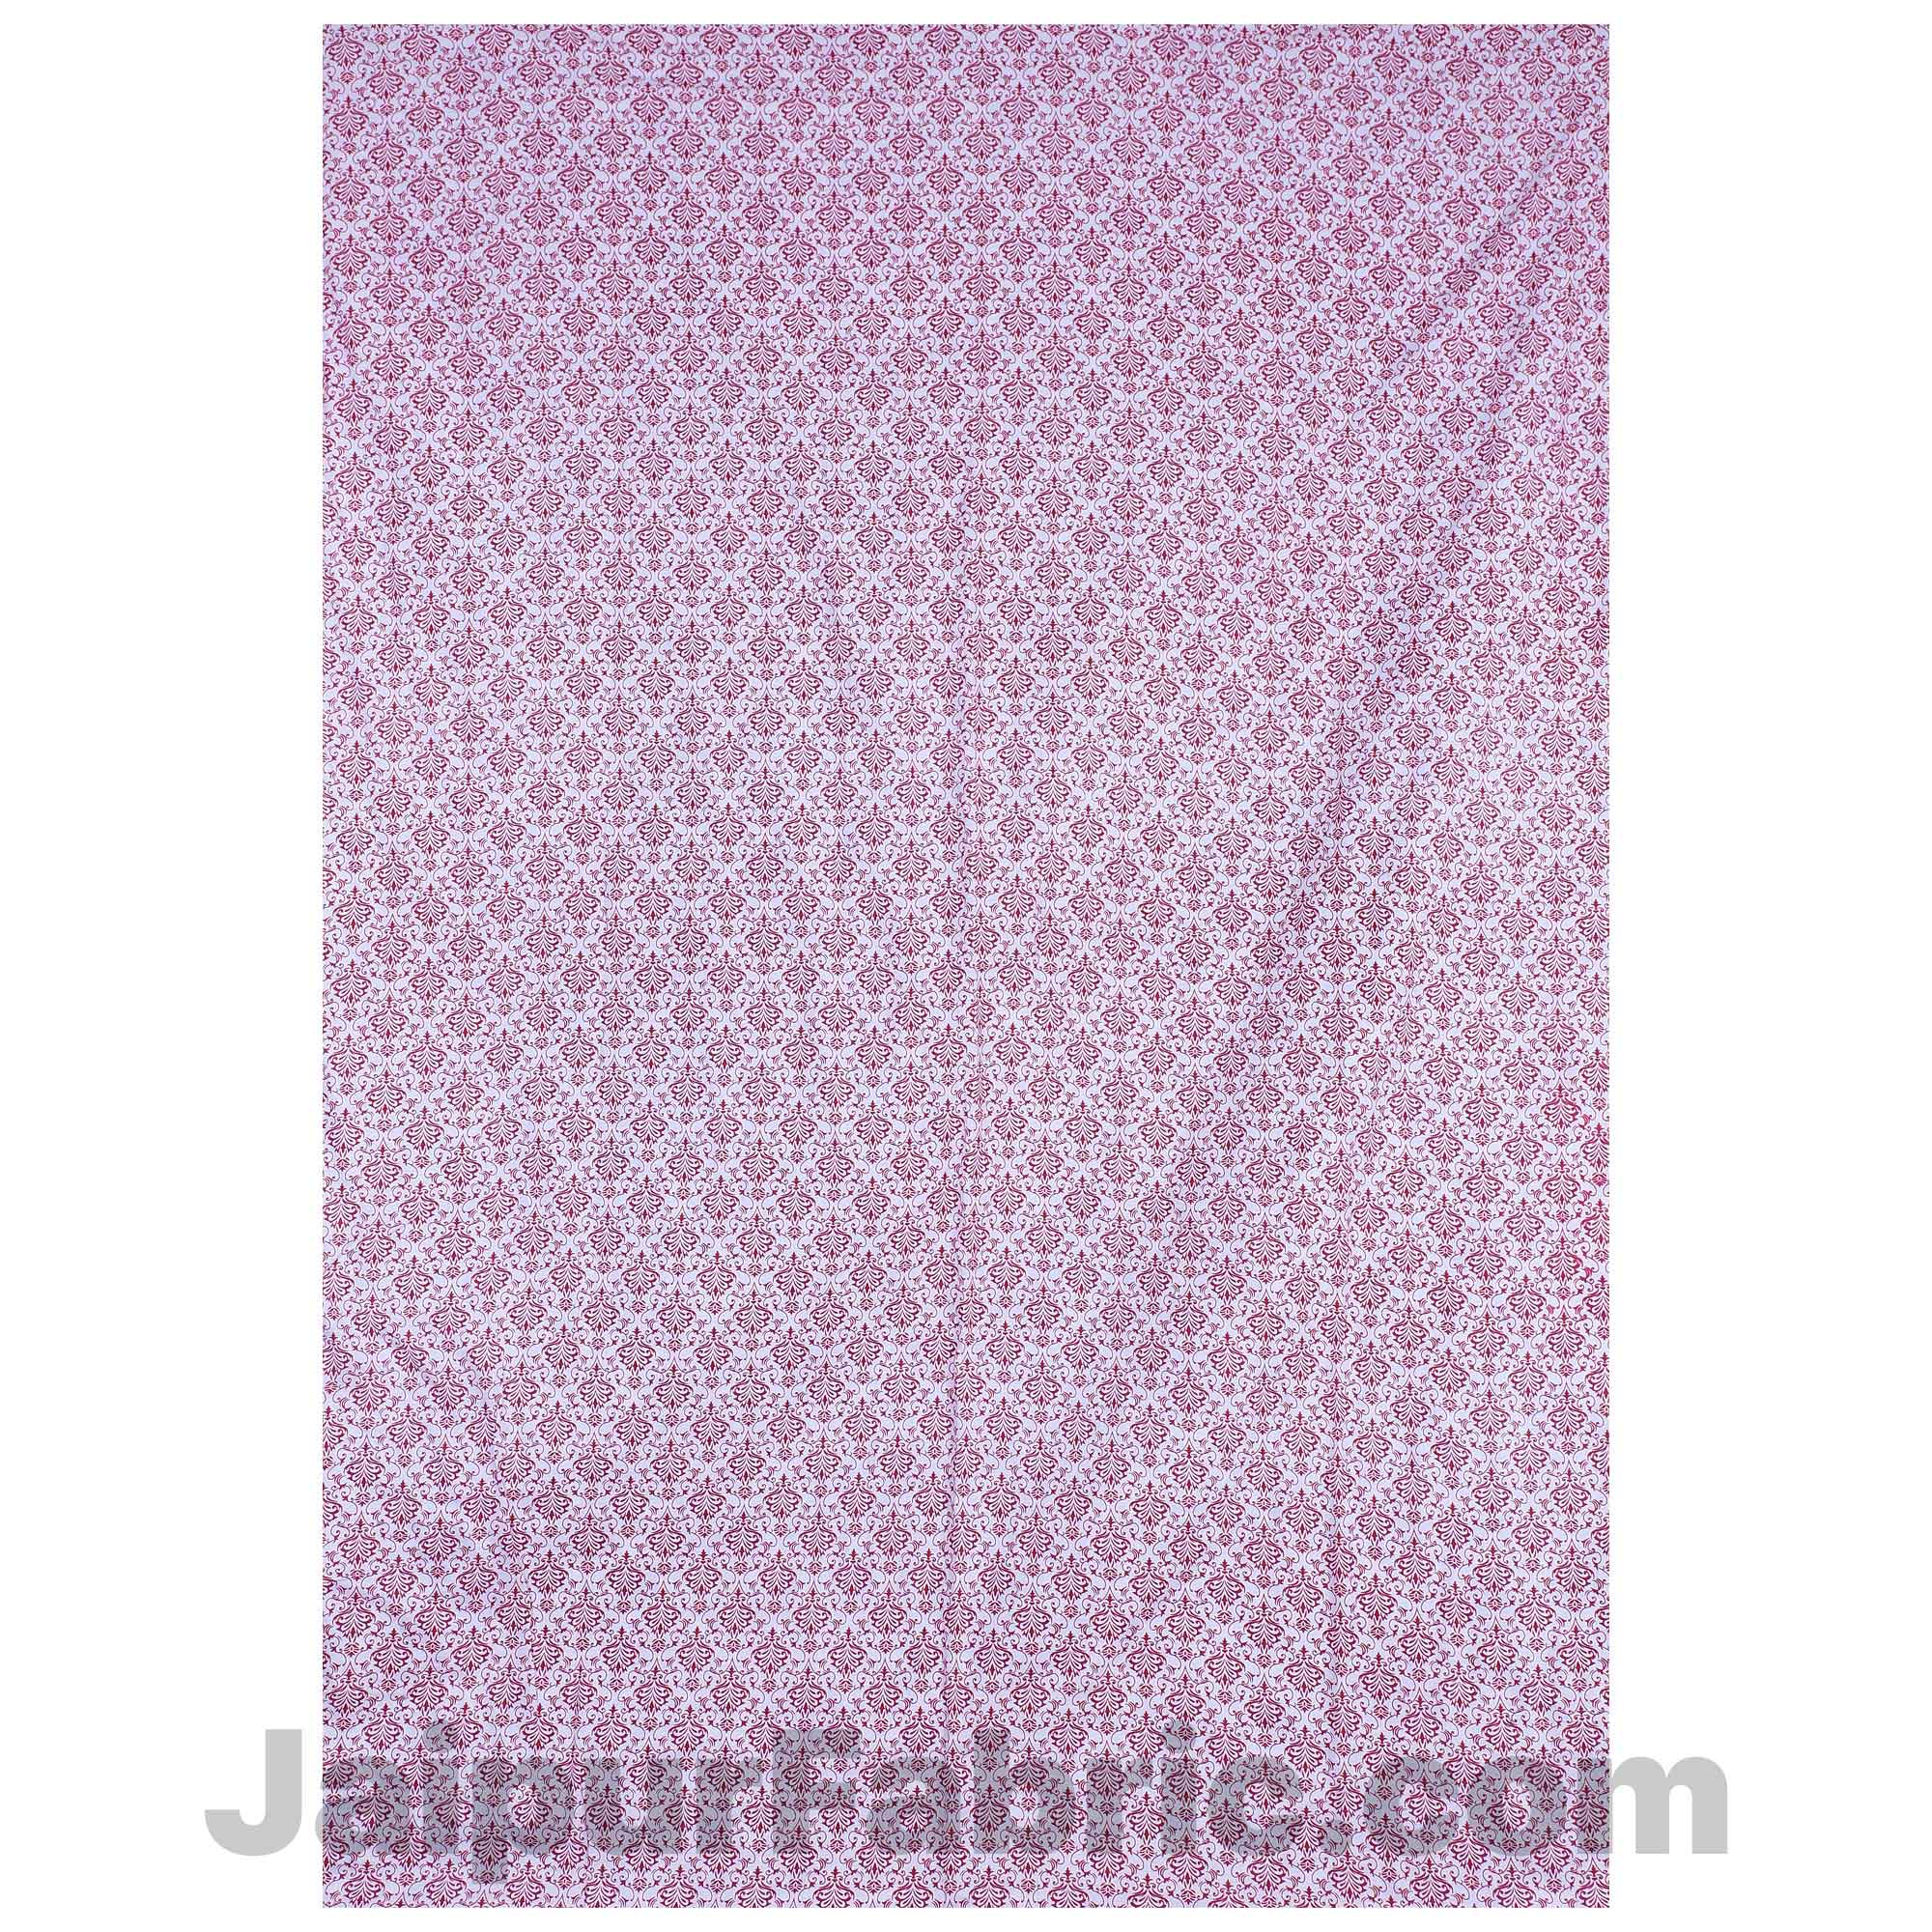 Pure Cotton Refreshing Floral Reversible Single Bed Blanket/ Duvet/Quilt/AC Dohar